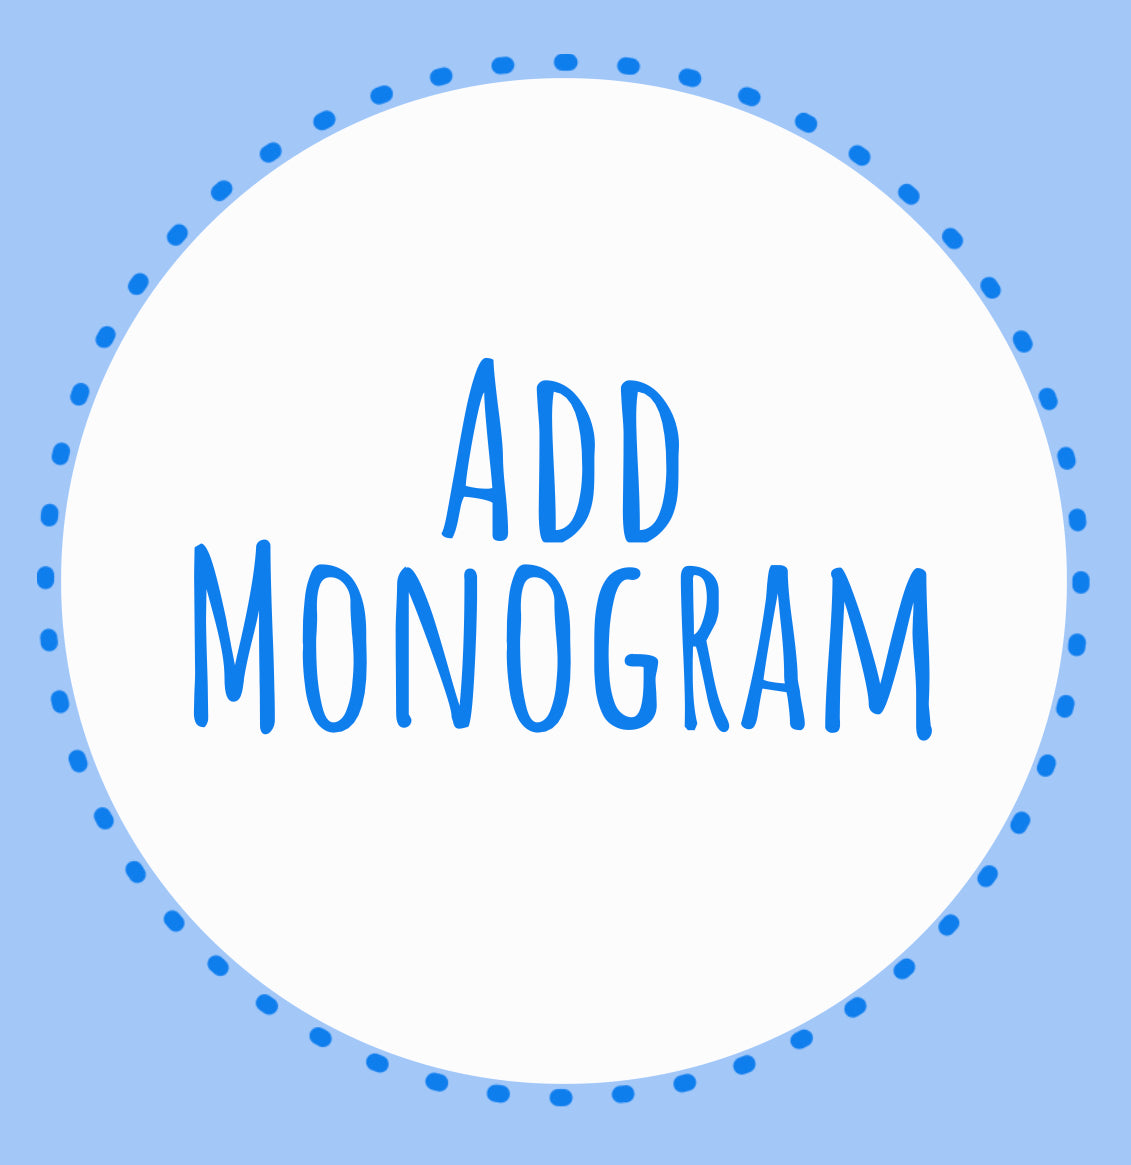 Add Monogram